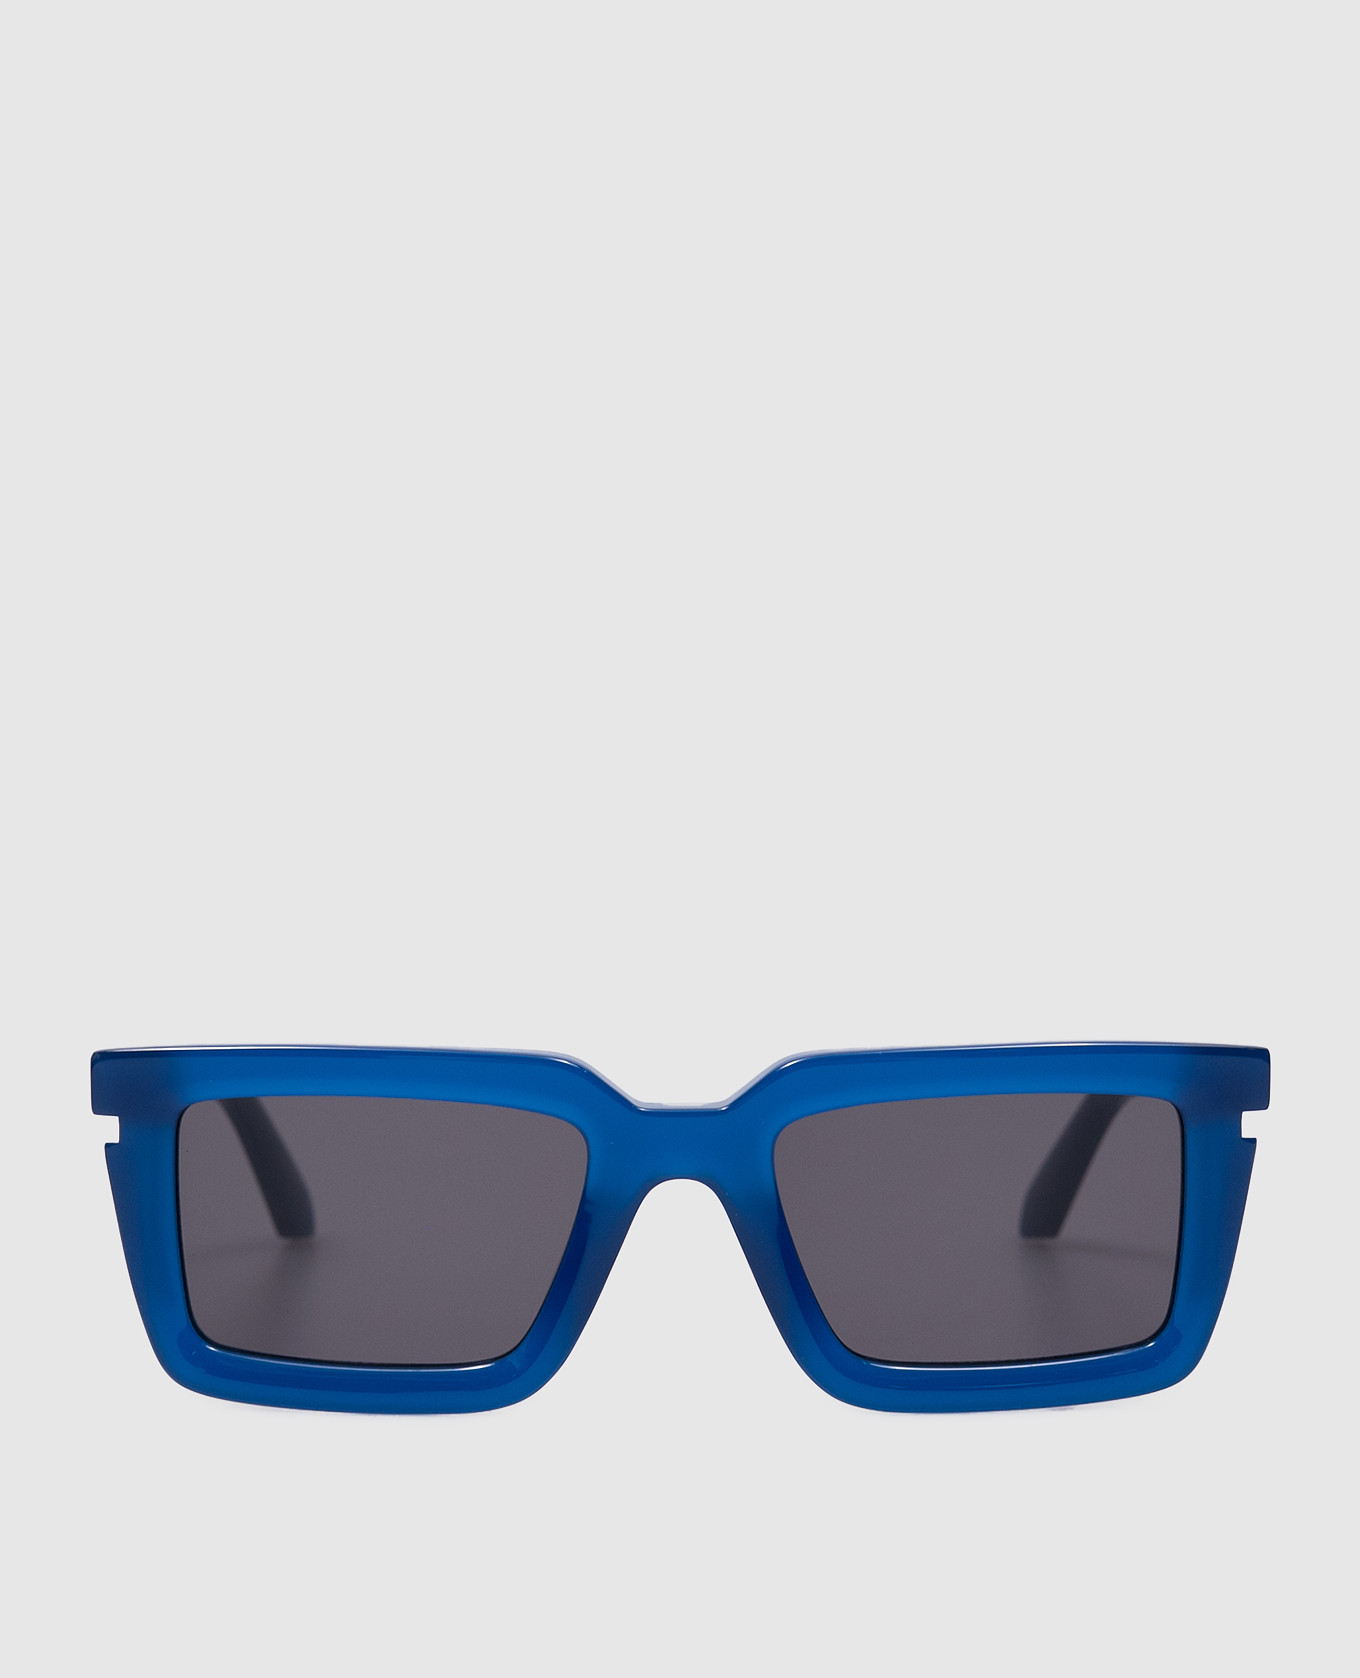 Blue Tucson sunglasses